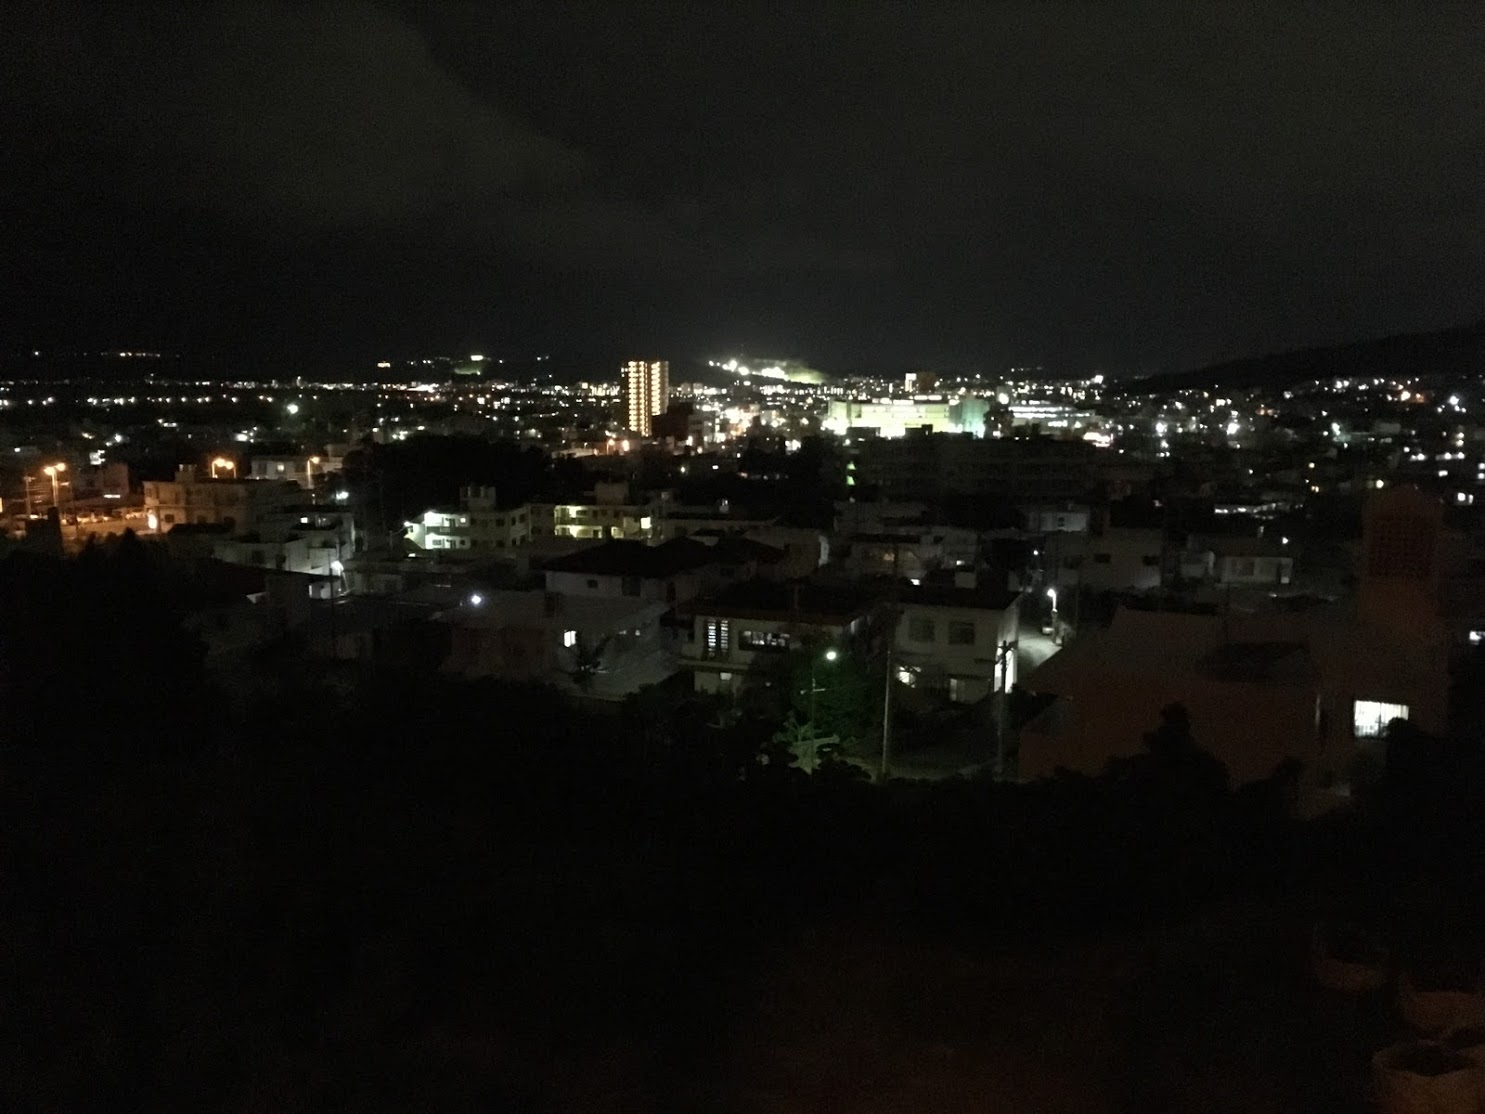 City in a night